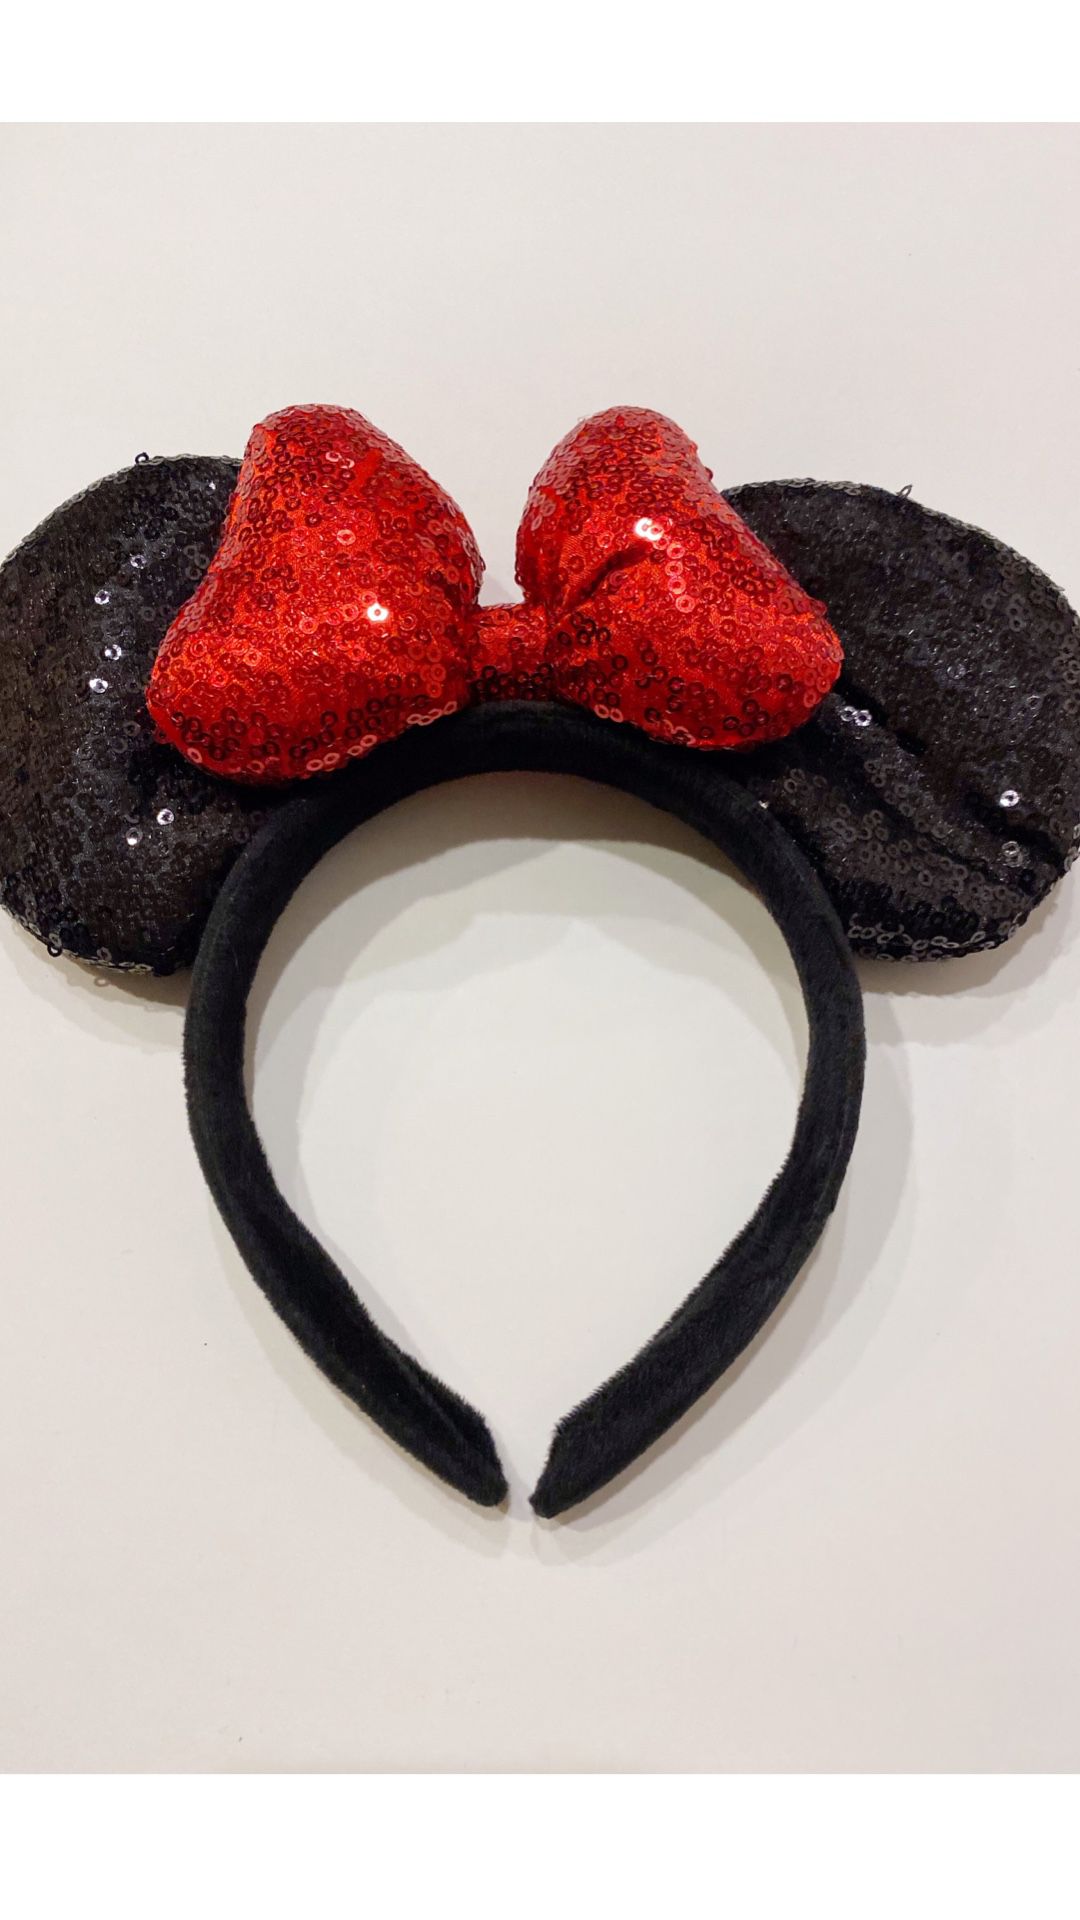 New Minnie Mouse ears headband